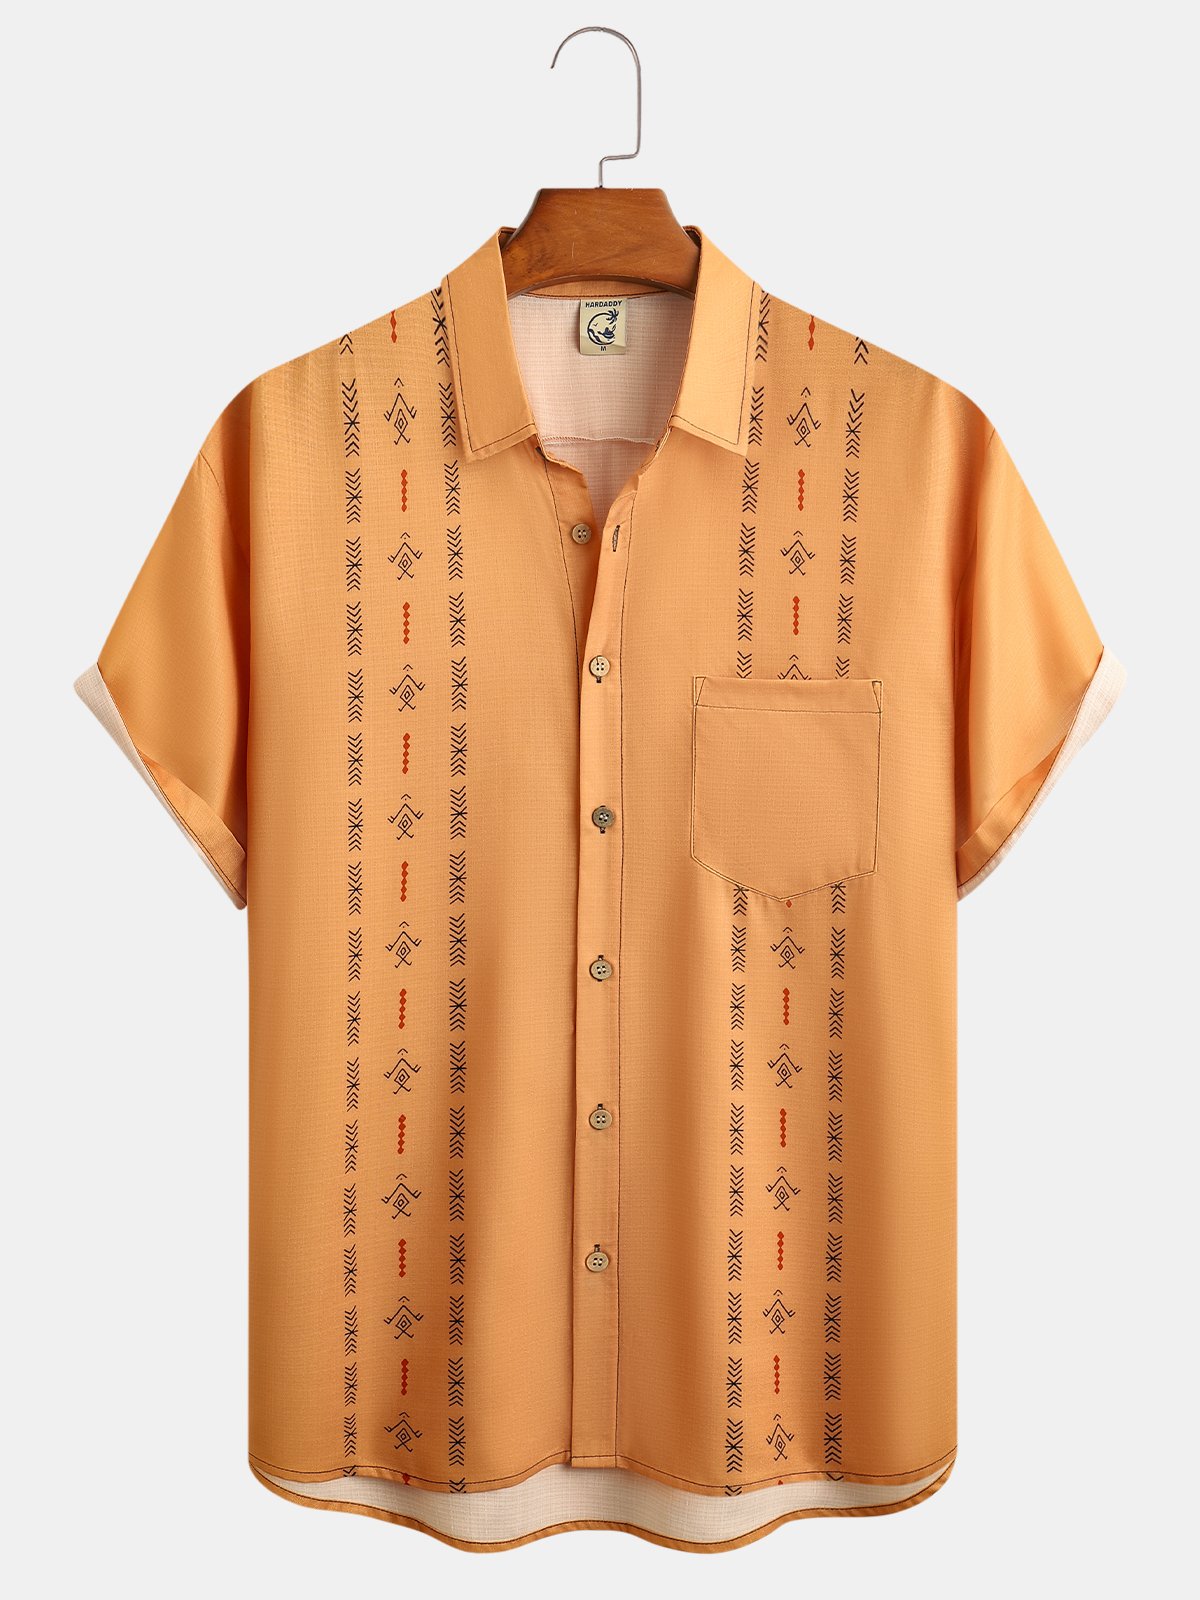 Hardaddy Stripe Chest Pocket Short Sleeve Casual Bowling Shirt